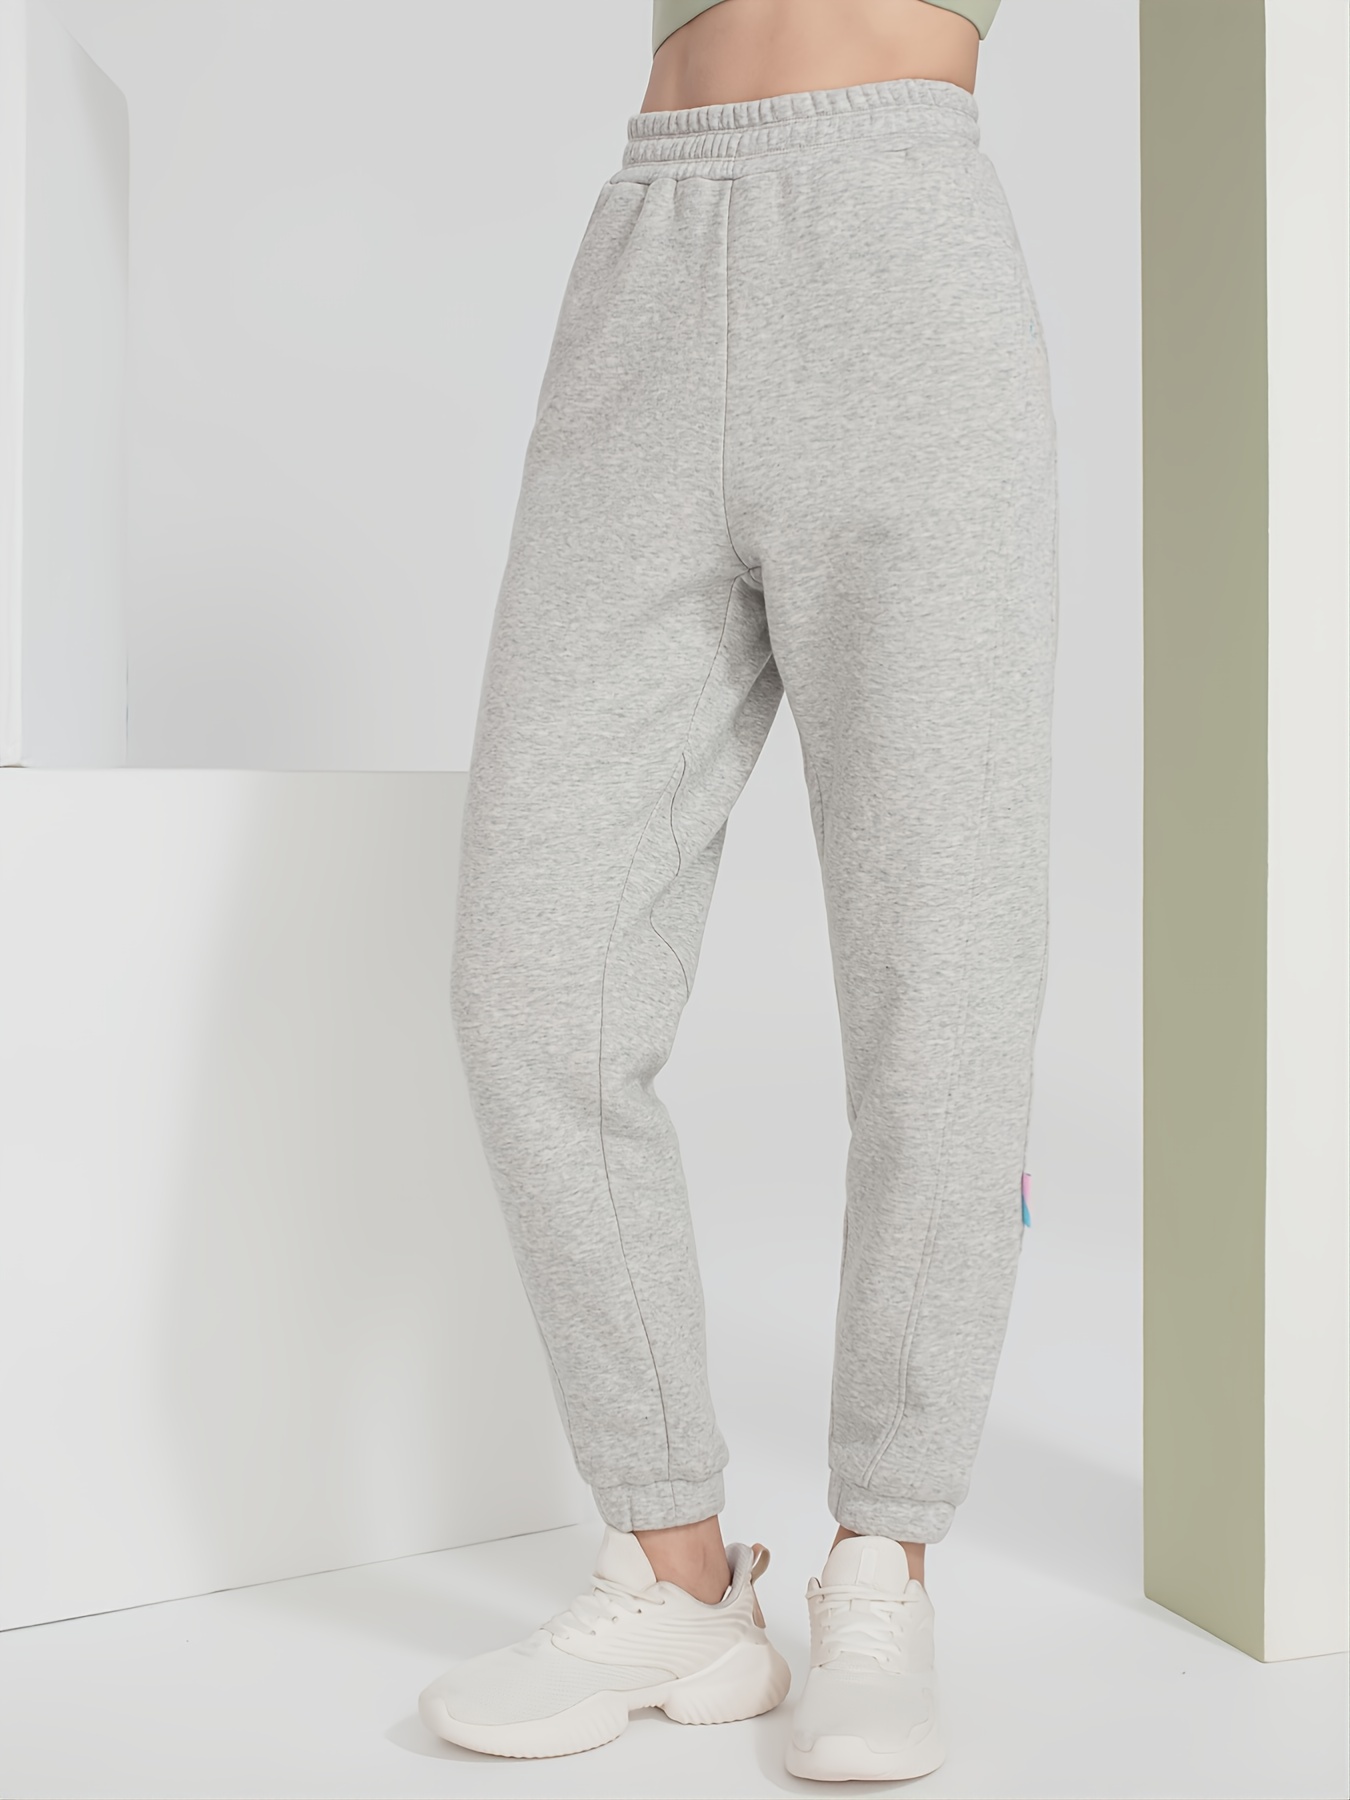 Esstive Women's Ultra Soft Fleece Comfortable Active Baggy Casual Jogger  Sweatpants - ShopStyle